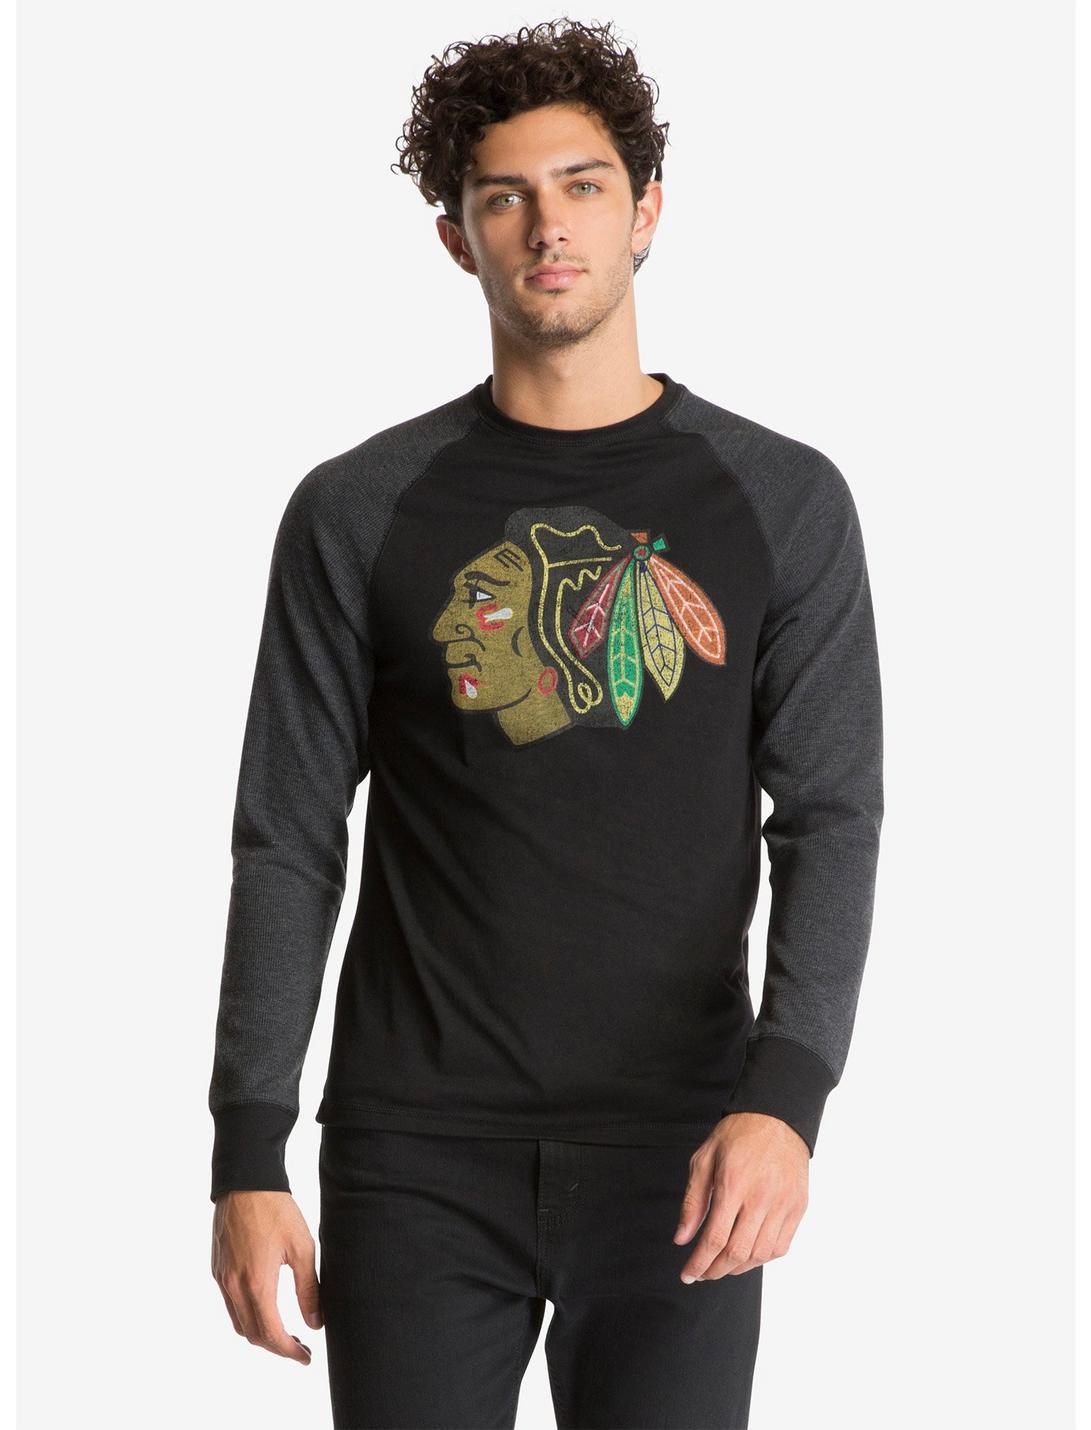 Red Jacket NHL Chicago Blackhawks Thermal Shirt, BLACK, hi-res